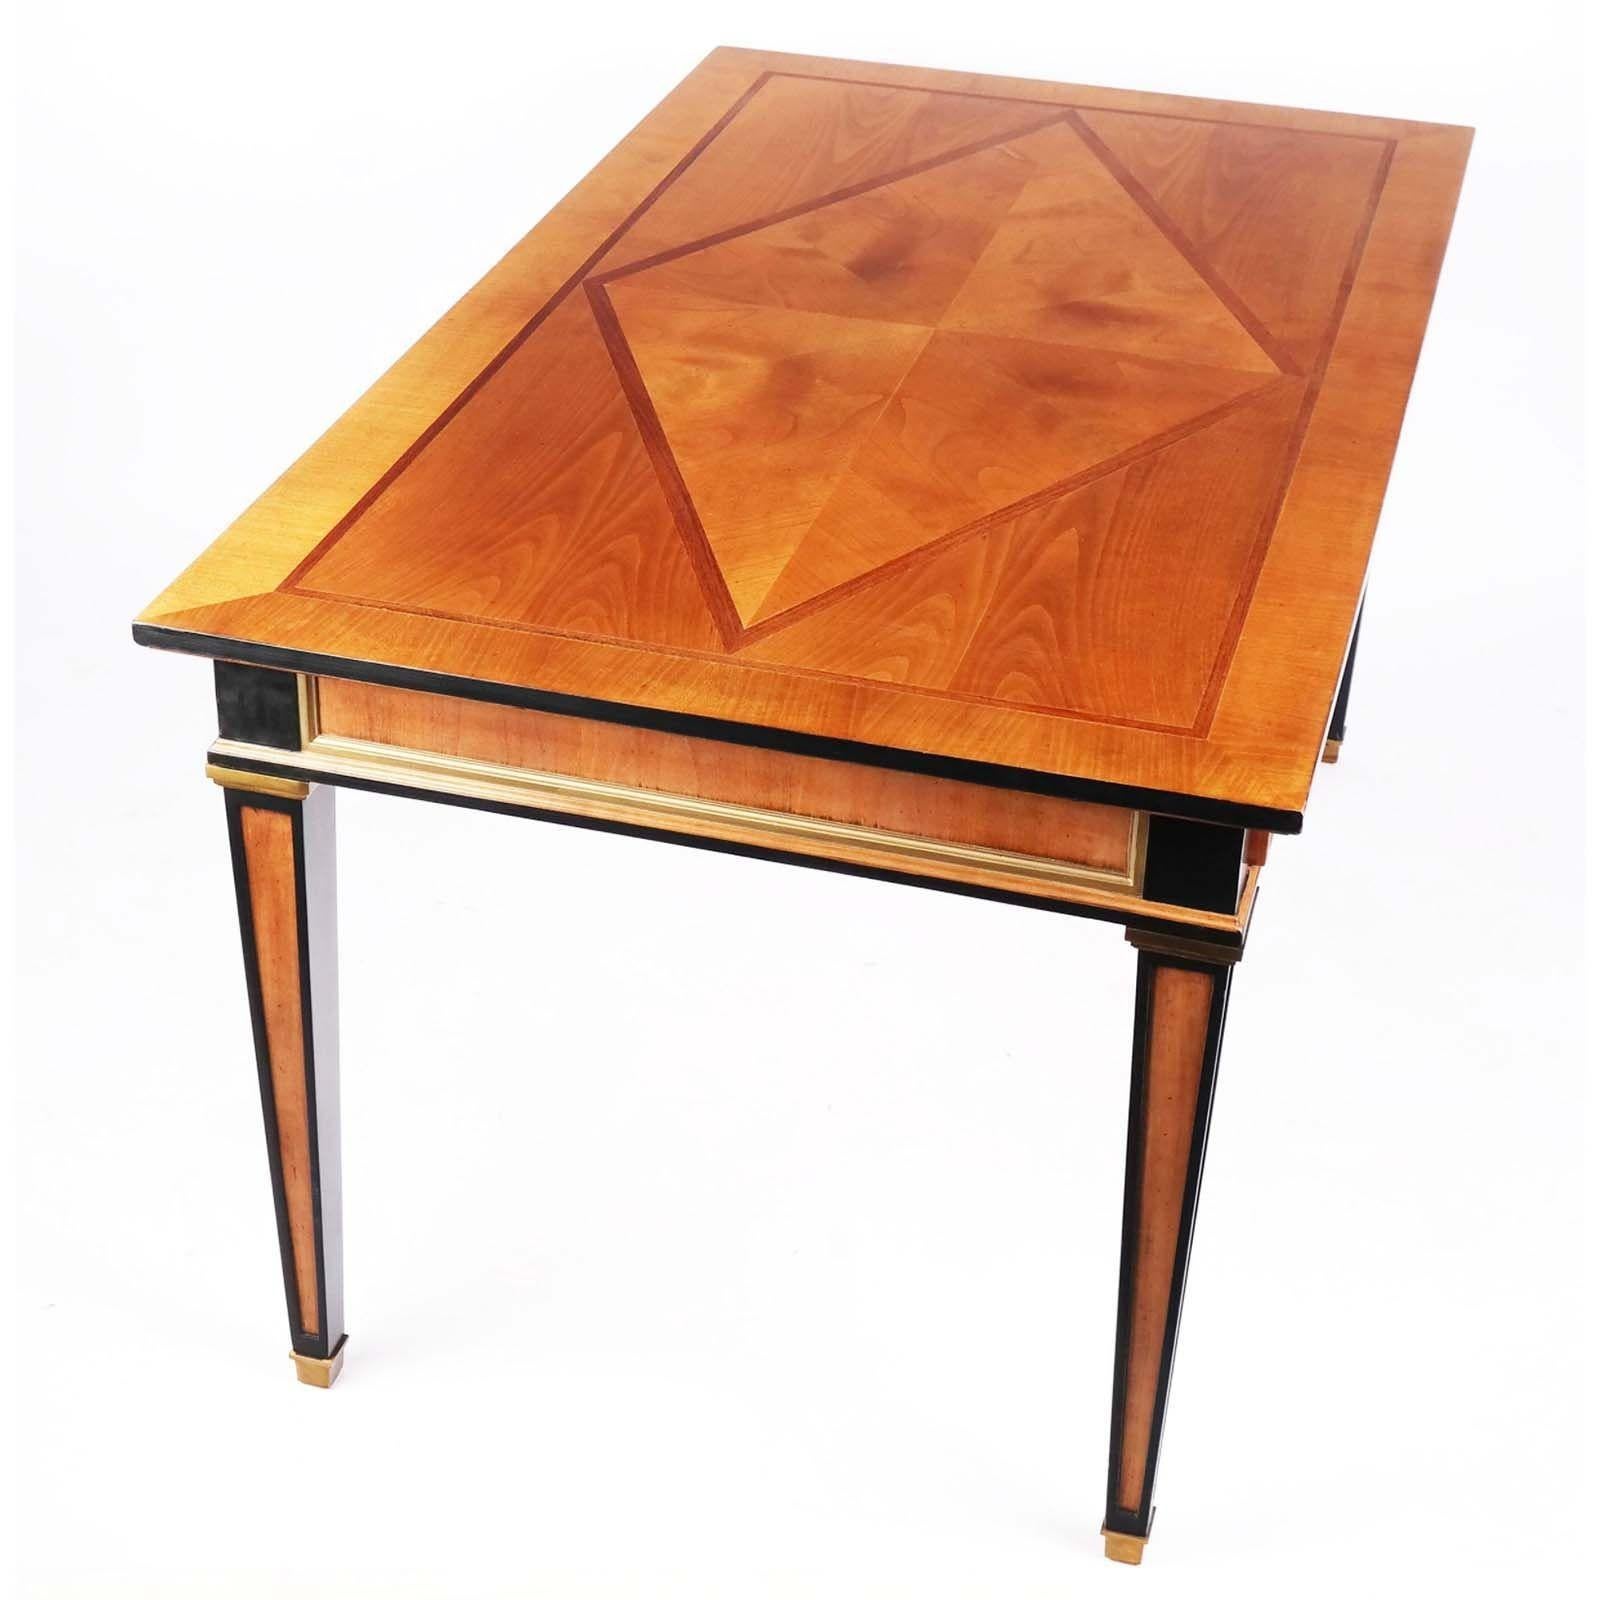 Mid-20th Century Empire-Style Parcel Ebonized Maple & Mahogany Desk For Sale